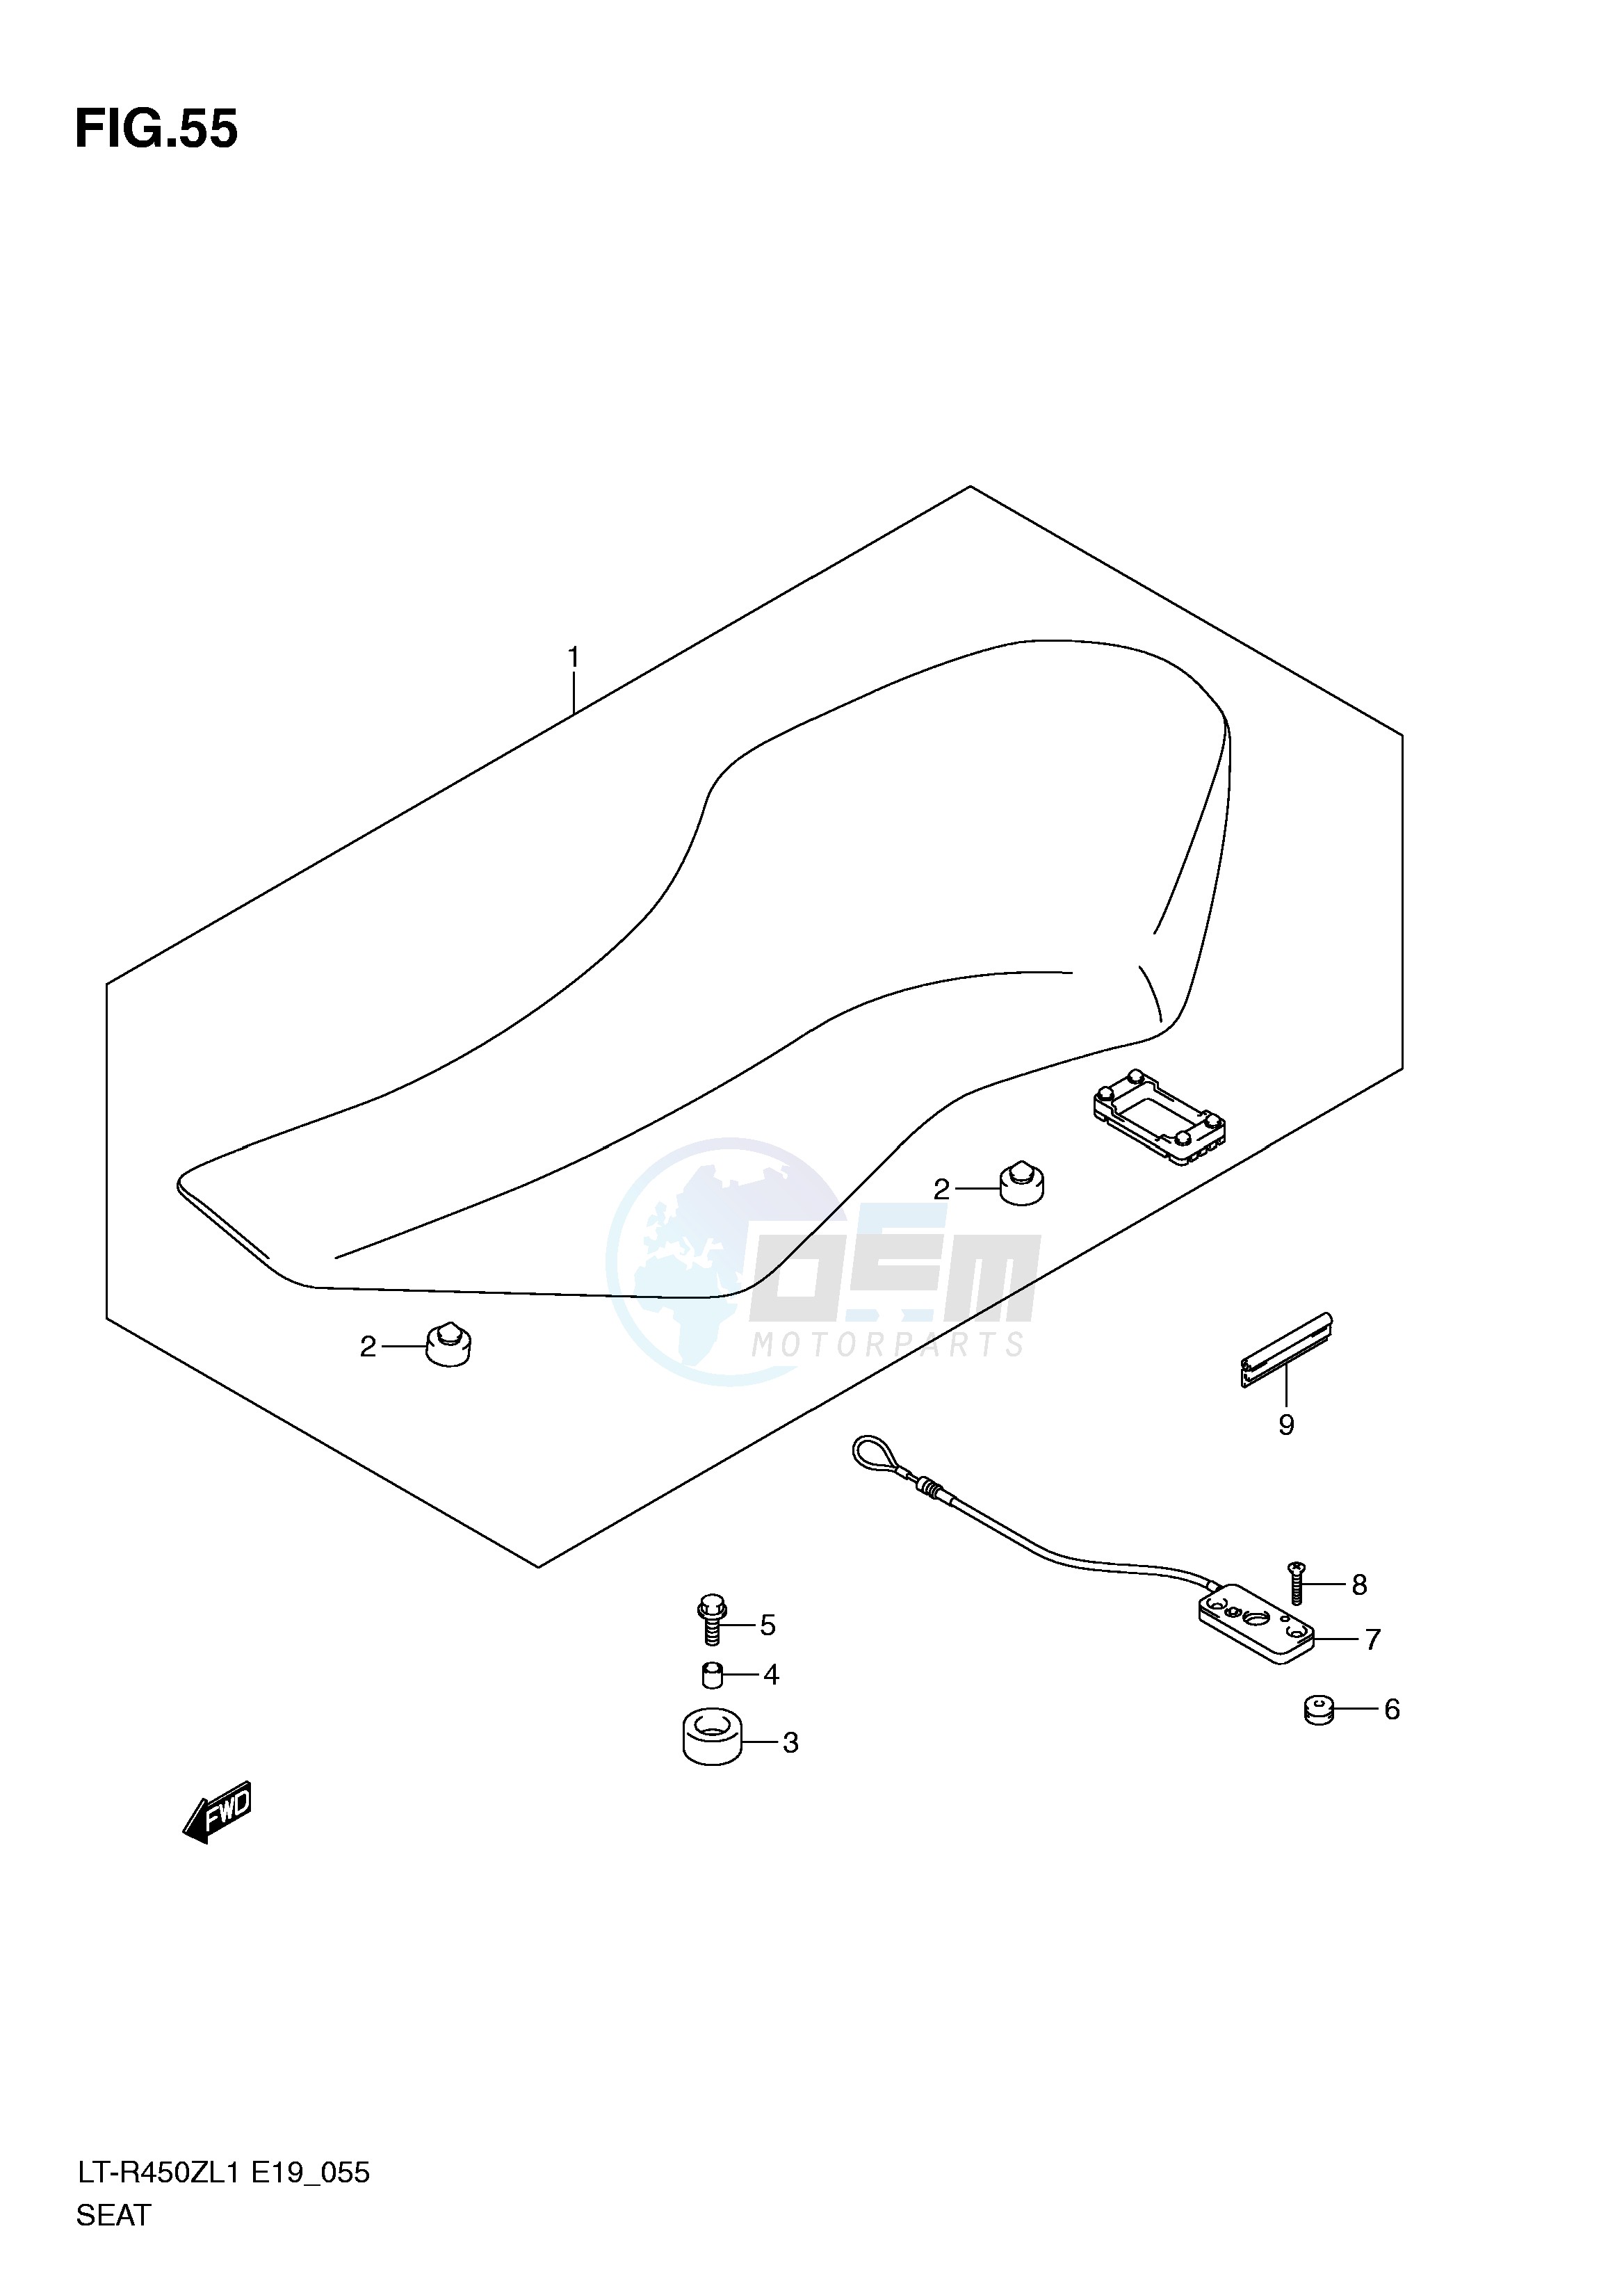 SEAT (LT-R450ZL1 E19) blueprint